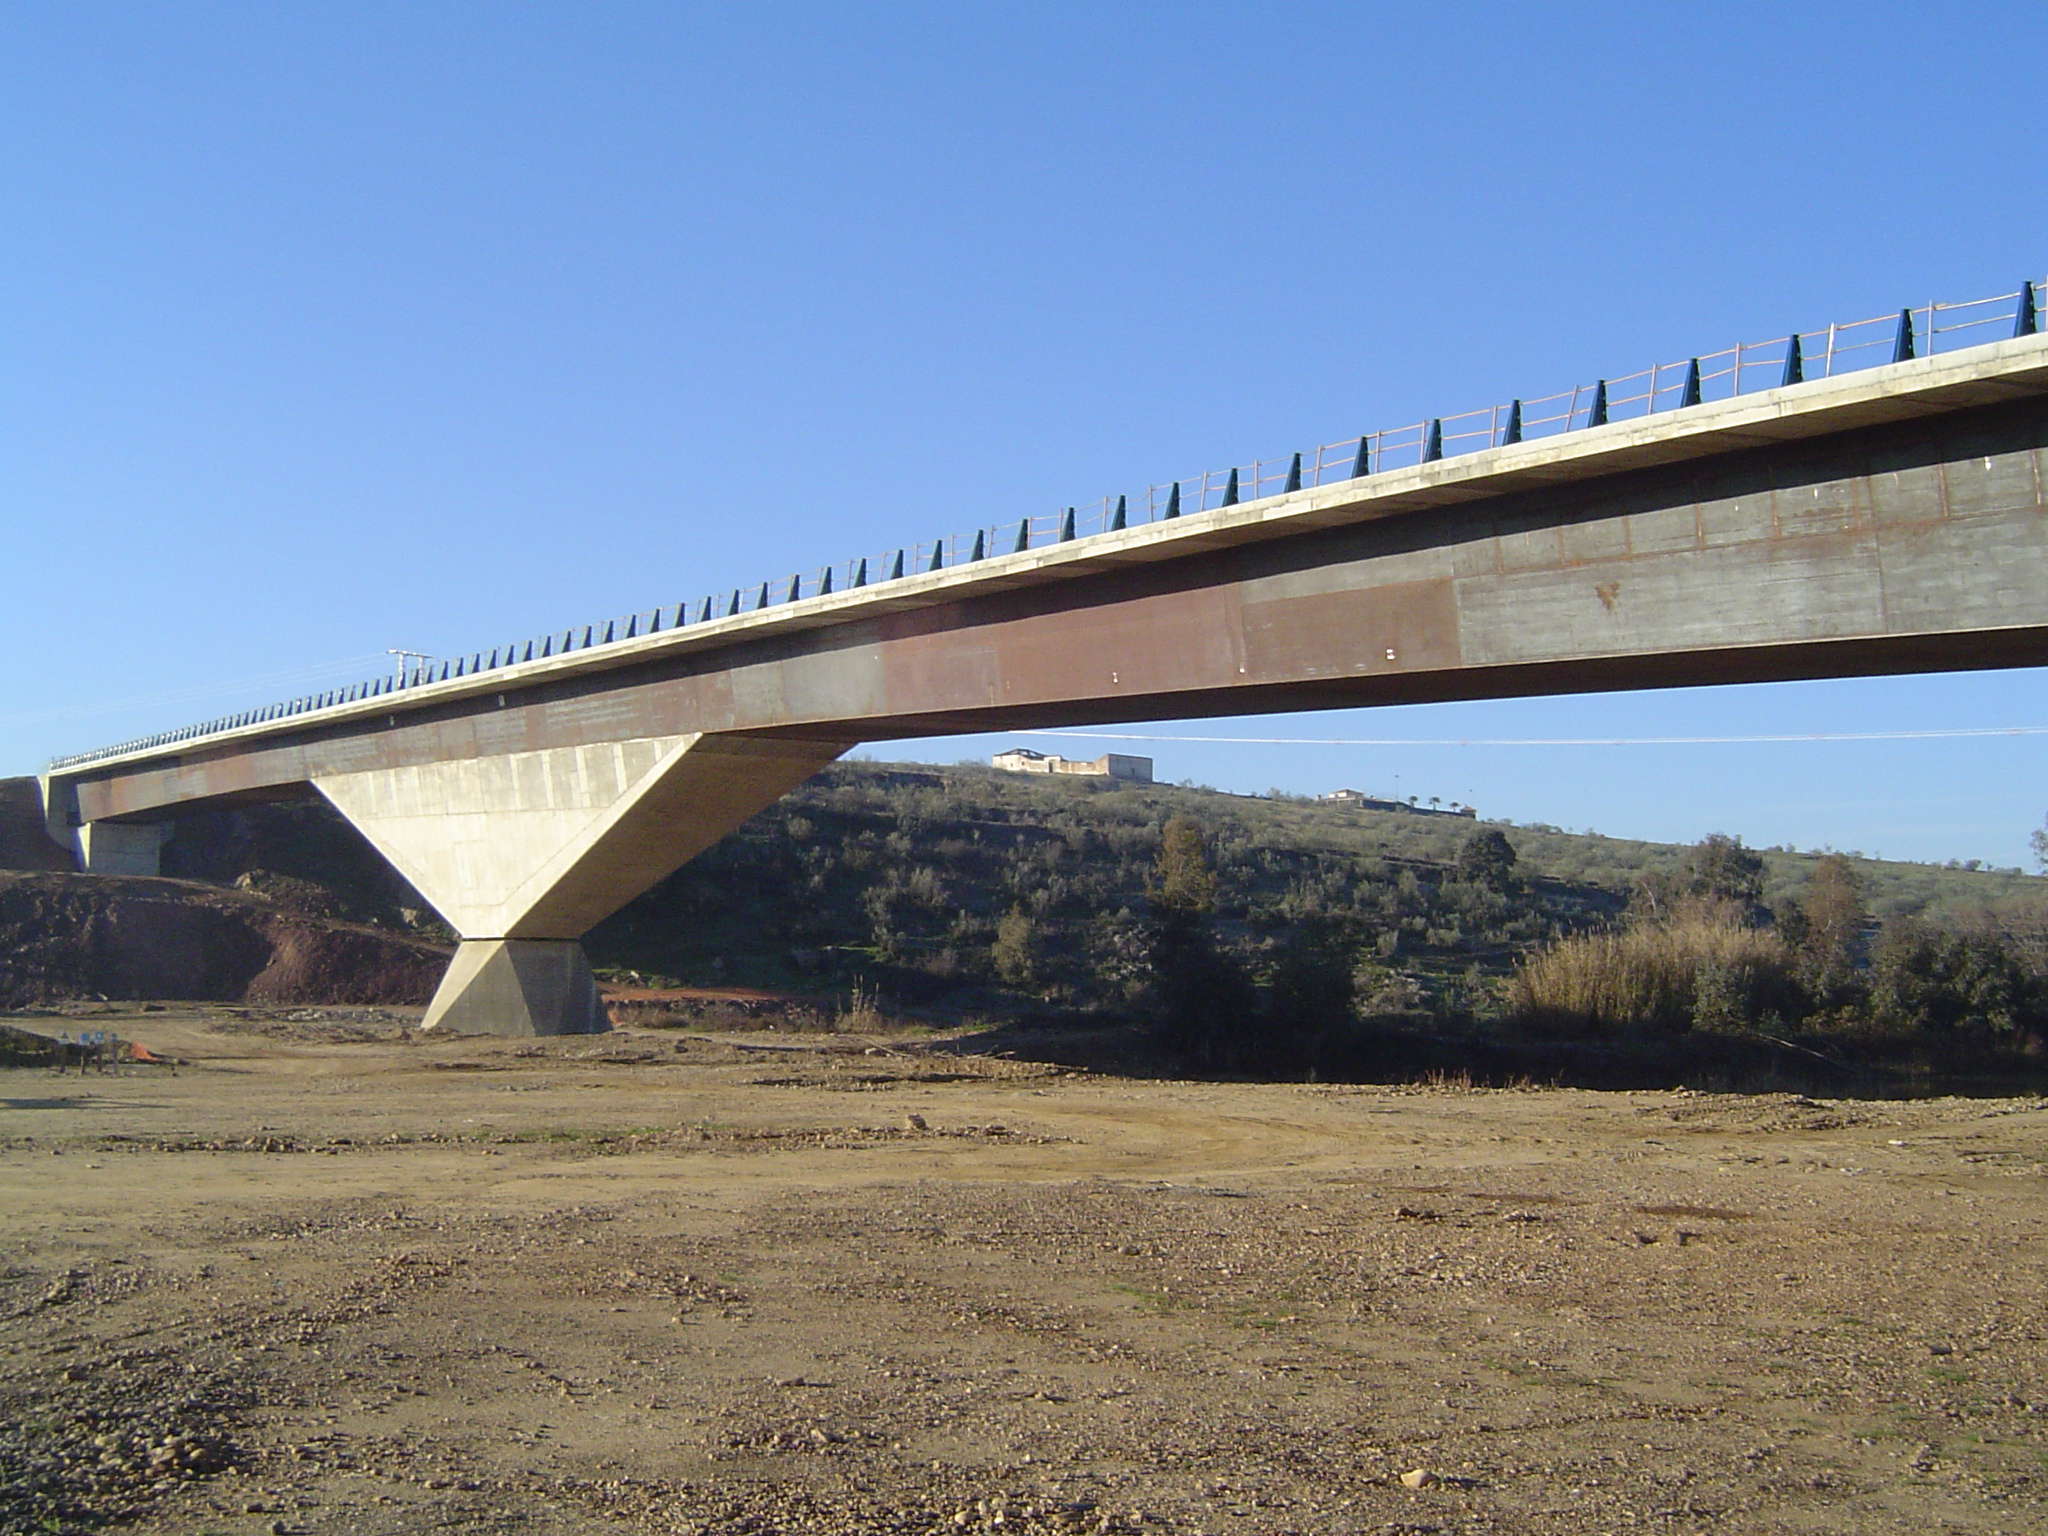 Bridge "Guadiana"